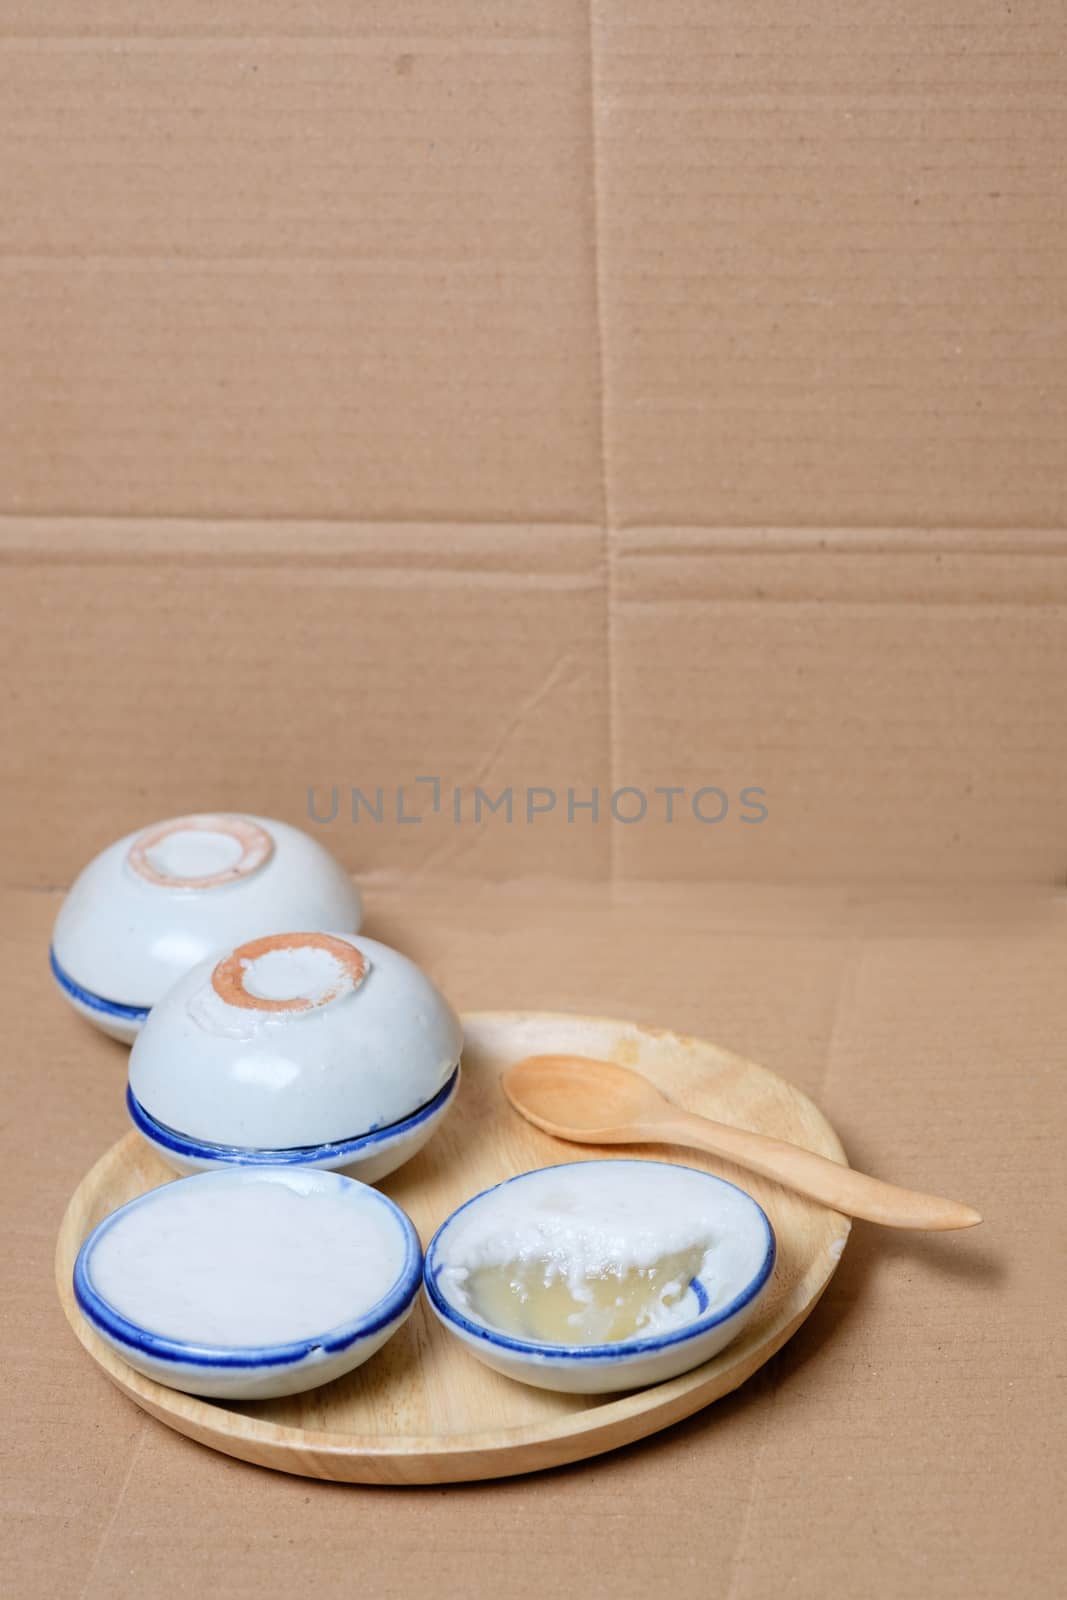 coconut milk custard in small porcelain cup (Thai dessert).